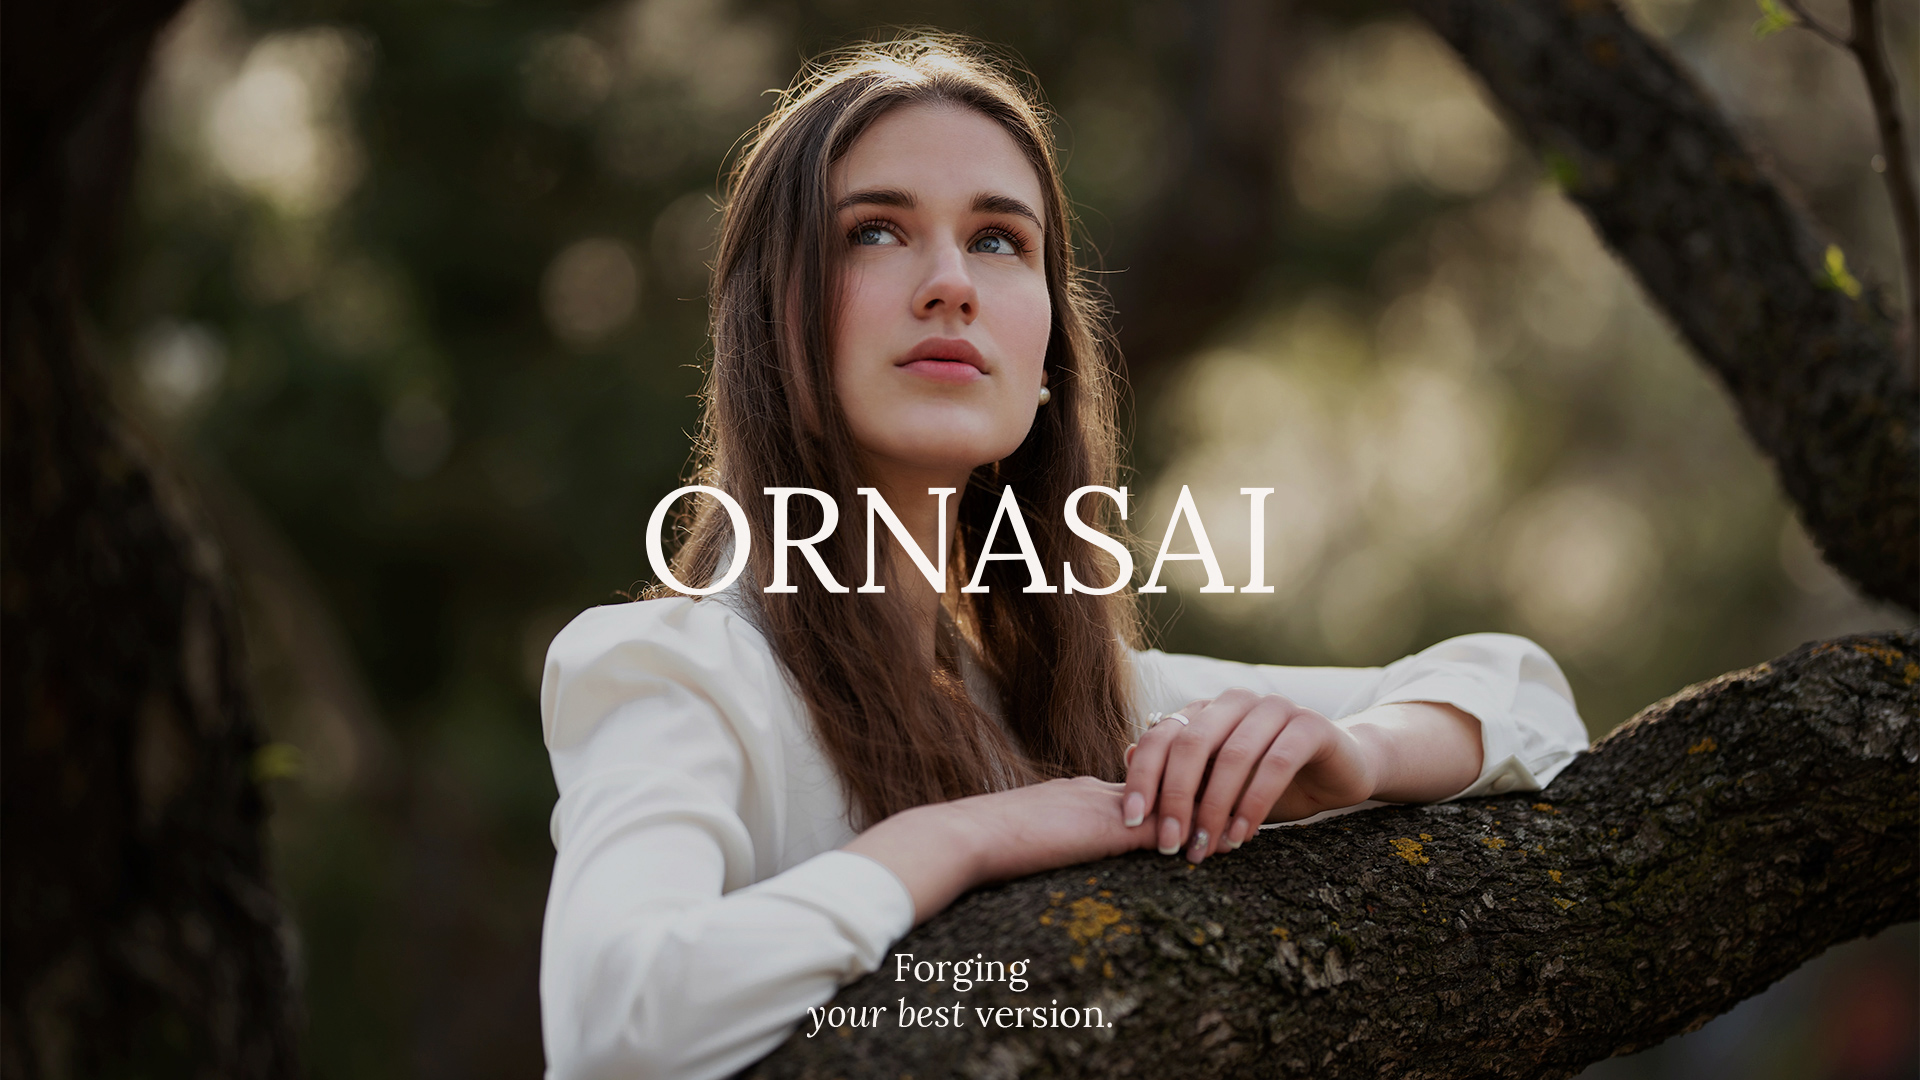 Ornasai Brand Identity Designed by Machado Design Studio